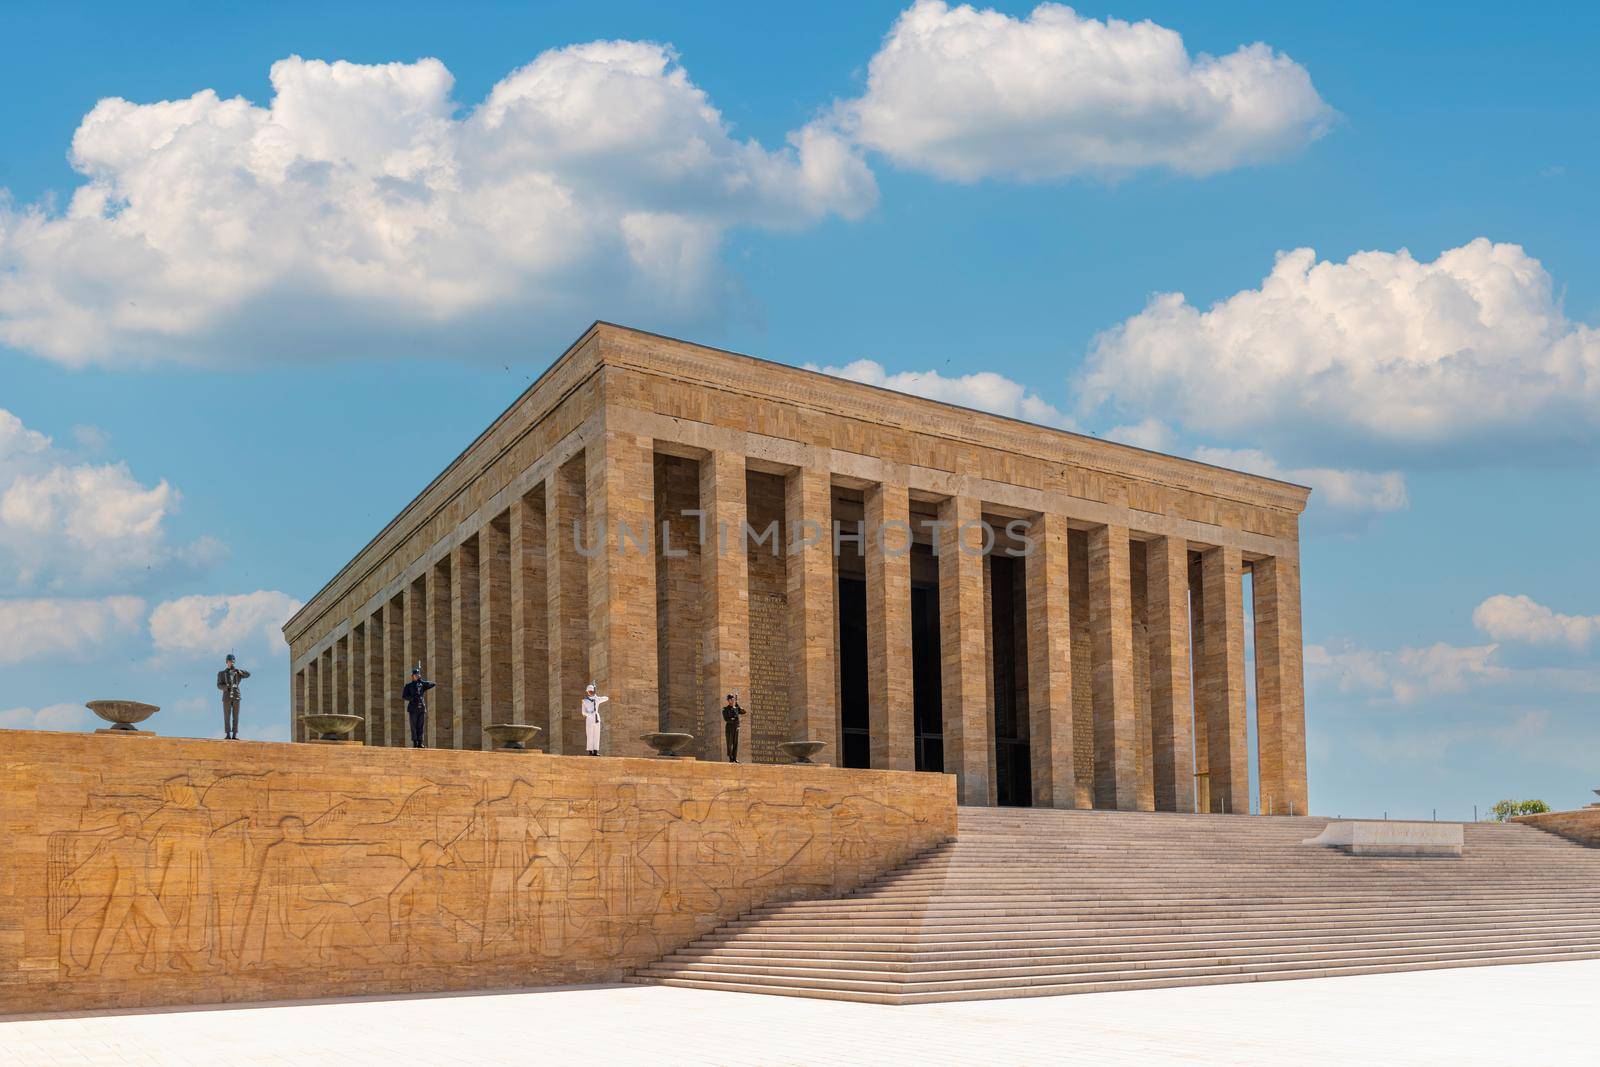 Ankara, Turkey - July 05, 2022: Anıtkabir, located in Ankara, is the mausoleum of Mustafa Kemal Atatürk, the founder of the Turkish Republic.